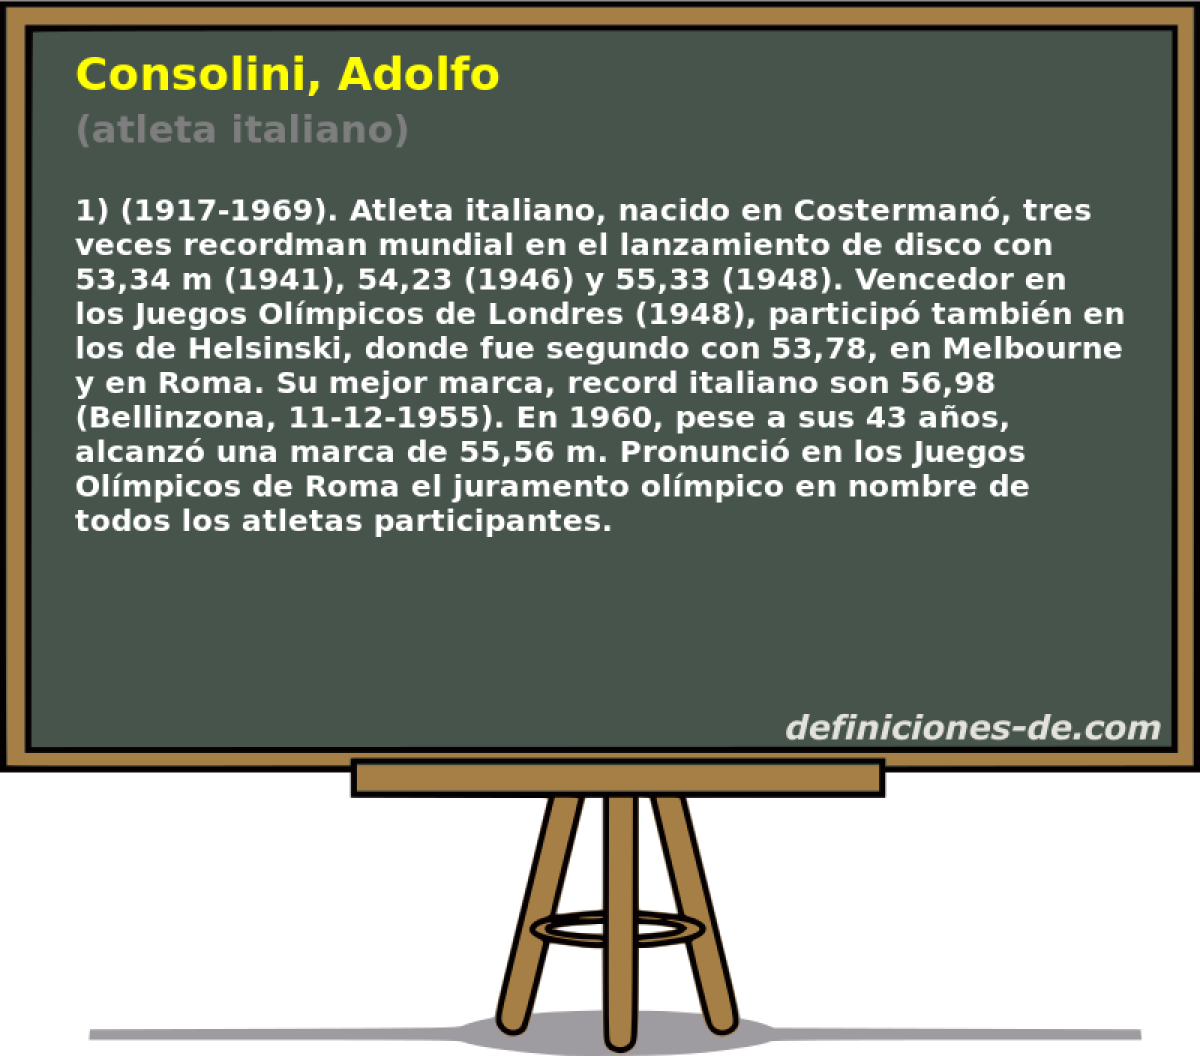 Consolini, Adolfo (atleta italiano)